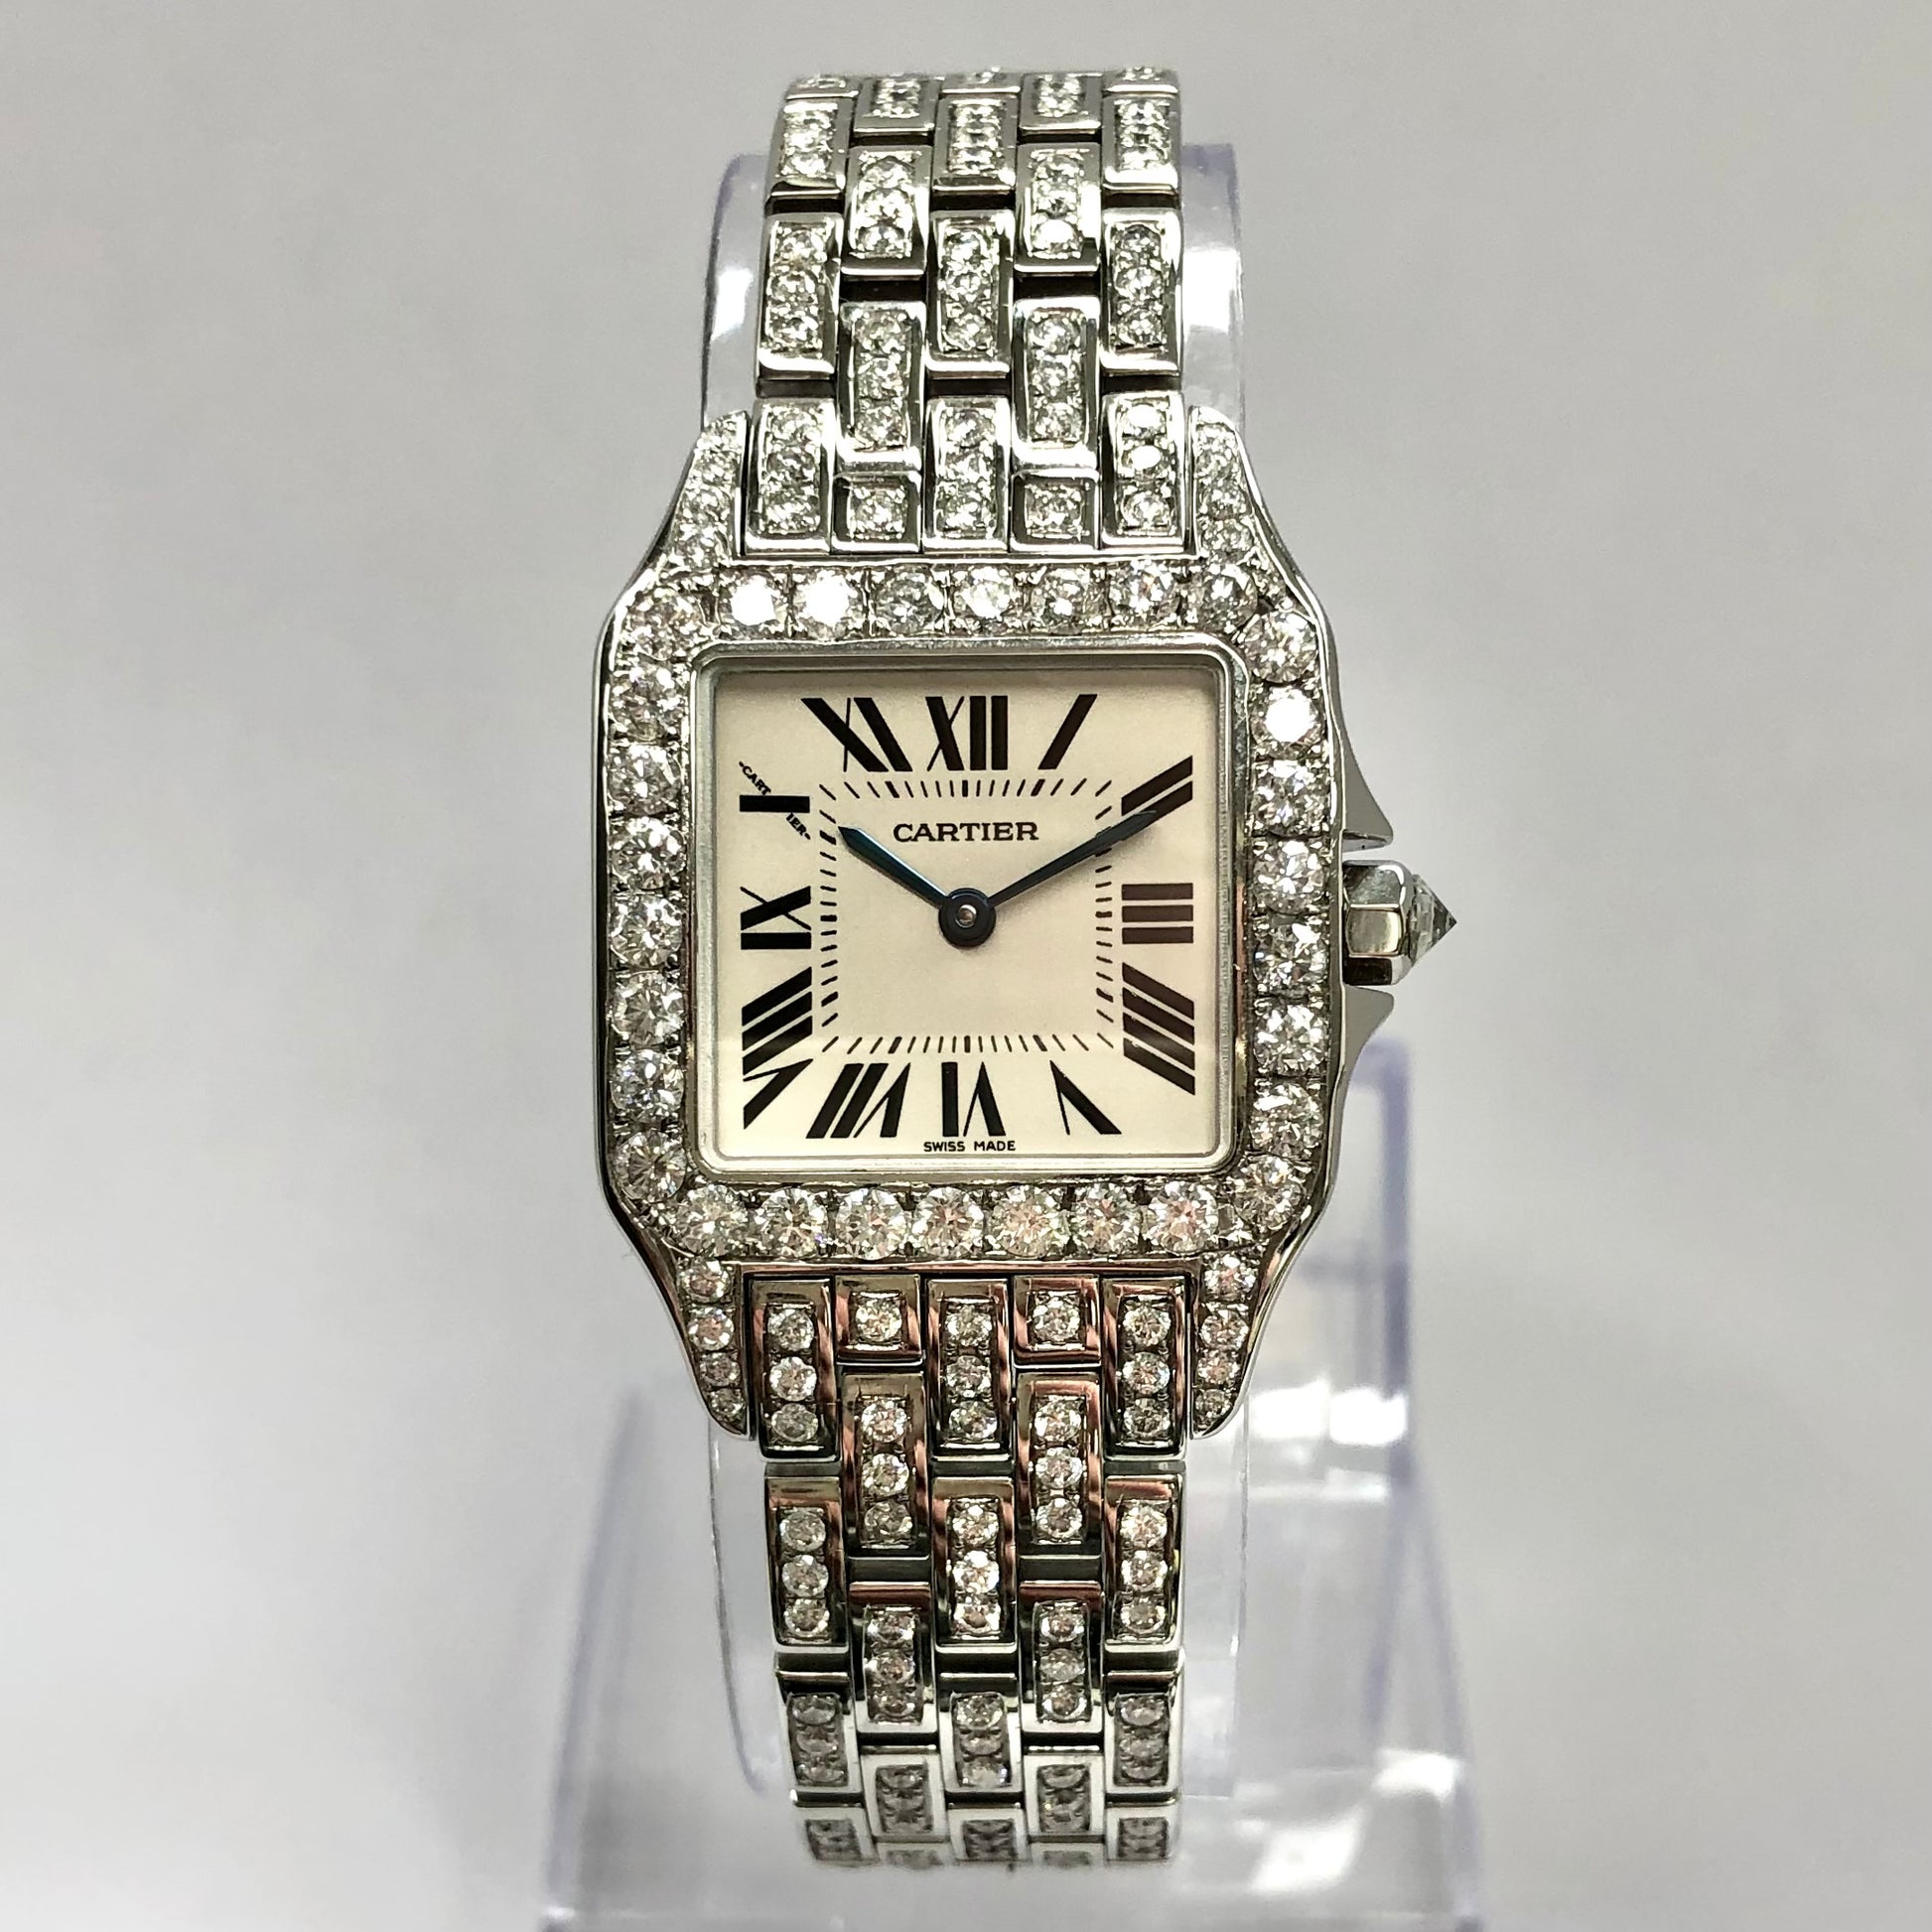 Luxury Watches & Fine Jewelry